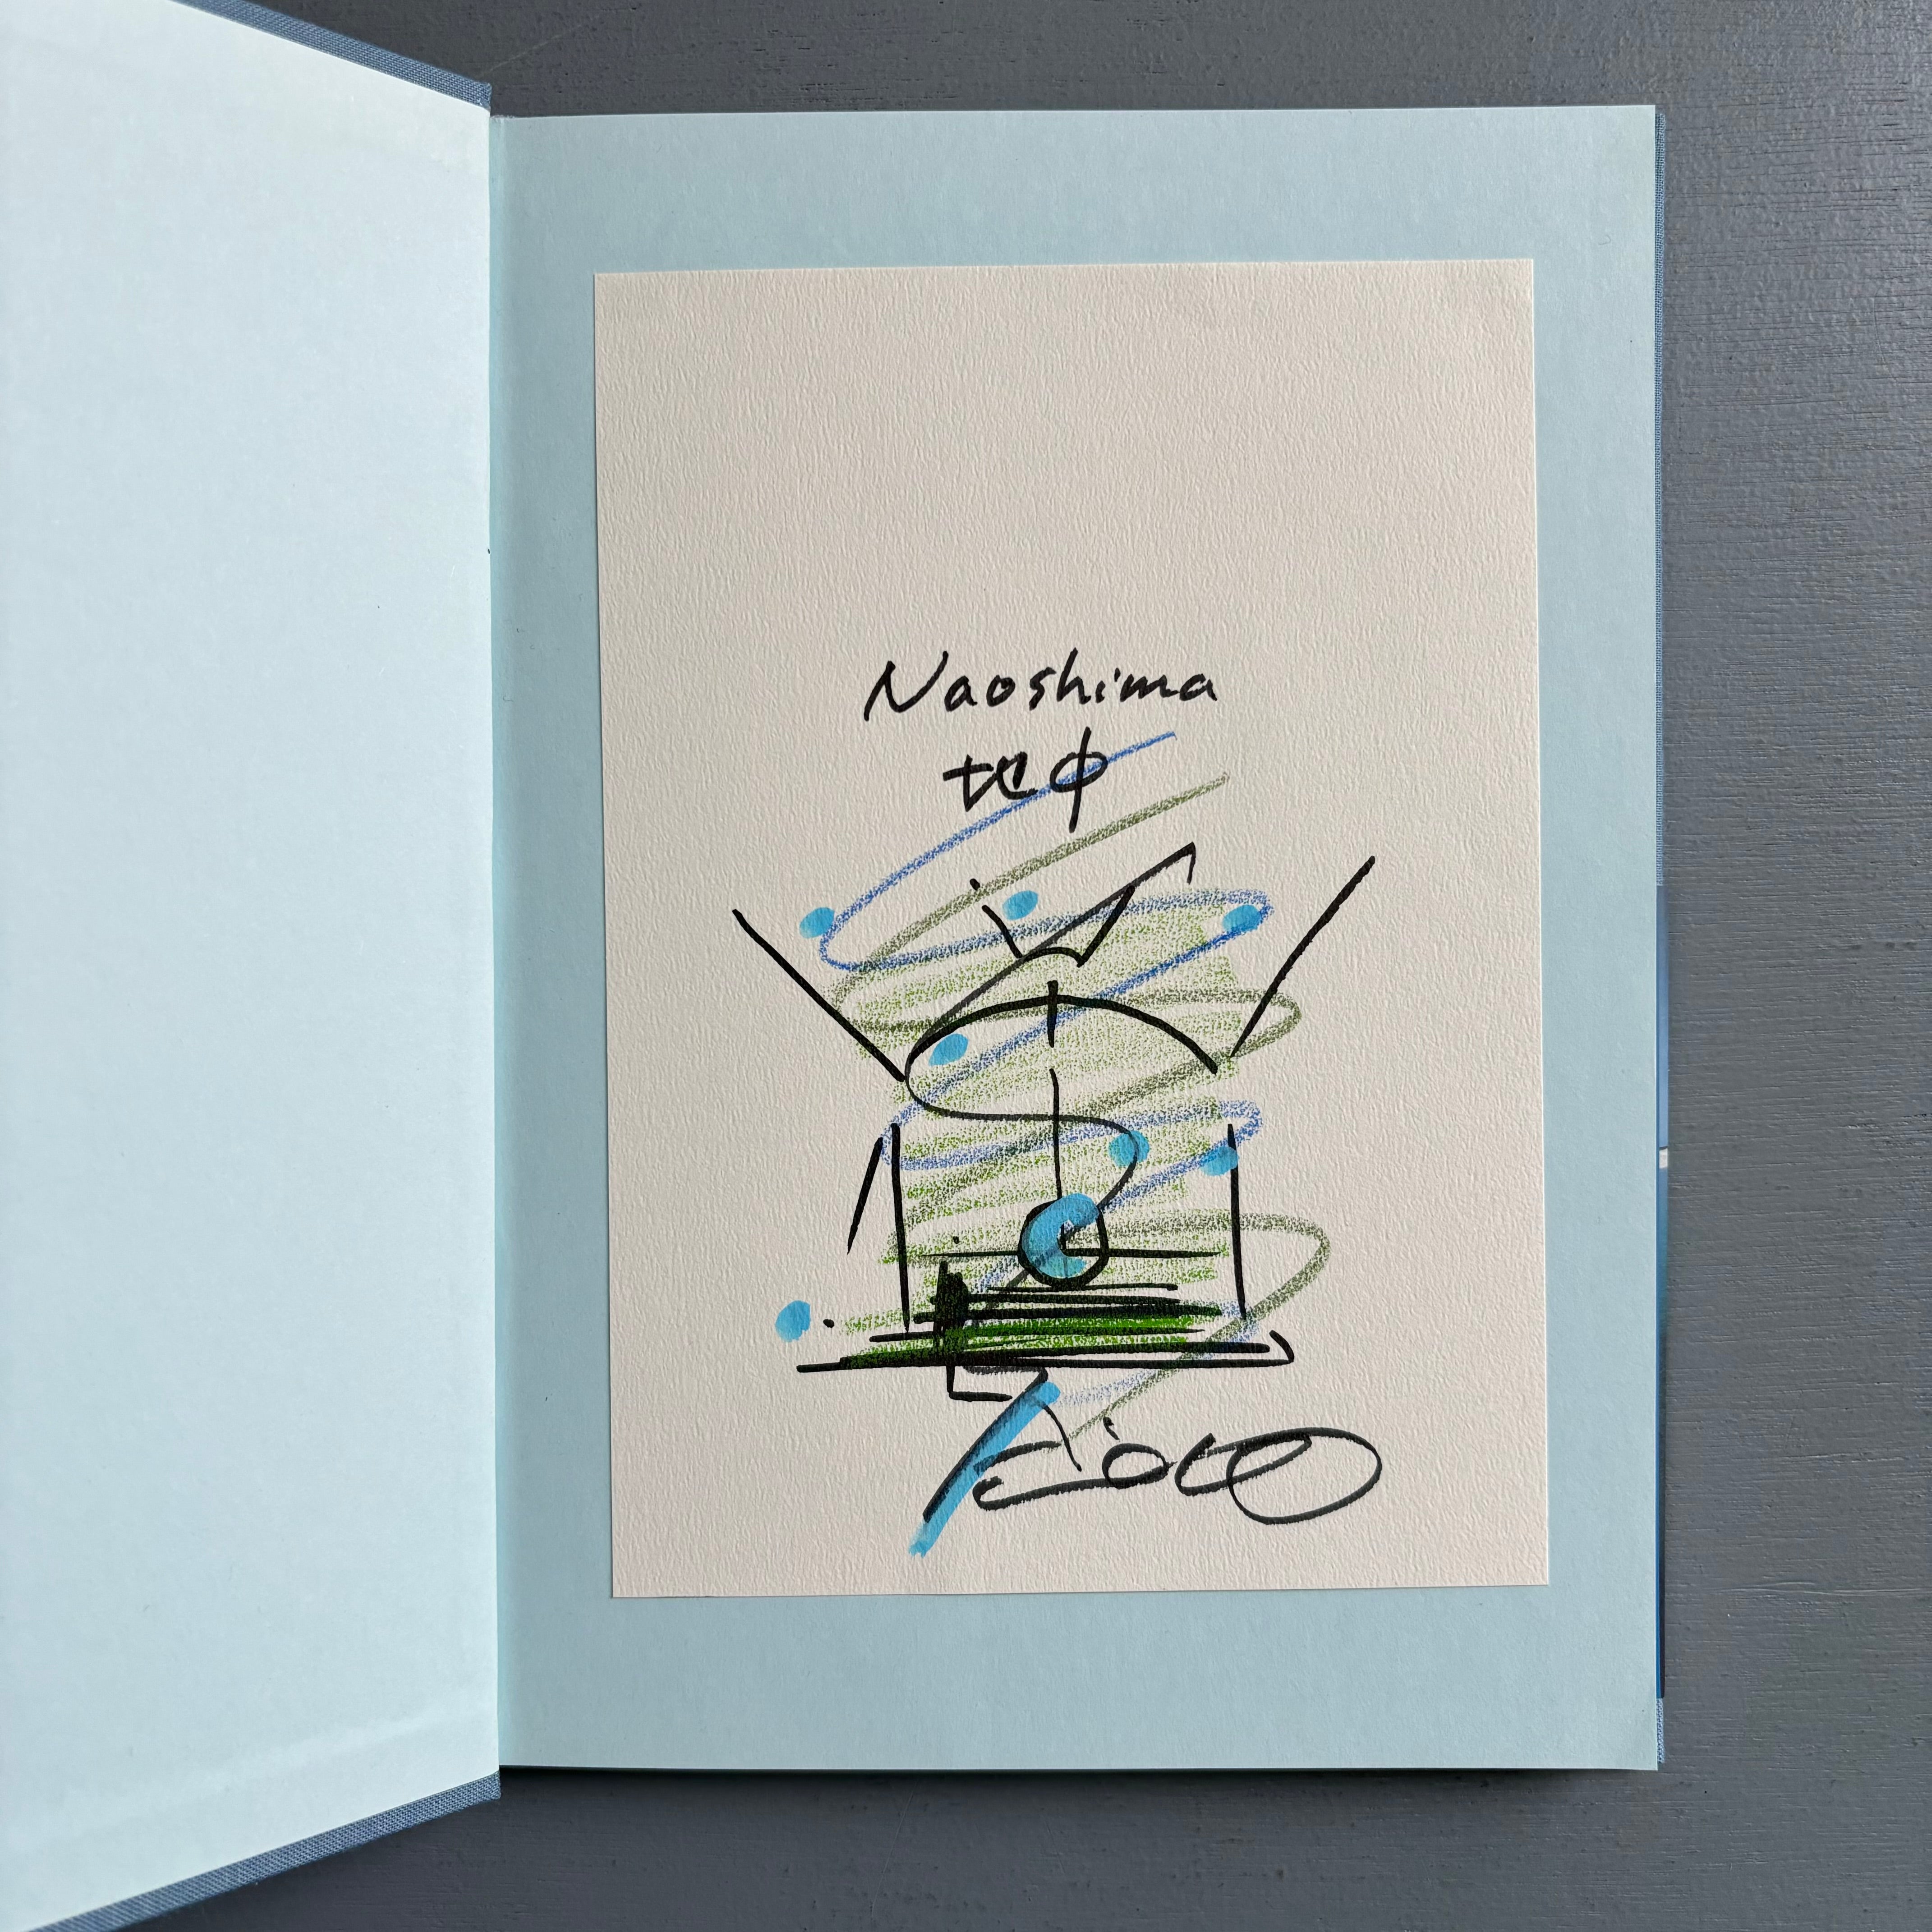 Tadao Ando (signed) - Naoshima - Le bon marché 2014 - Saint-Martin 